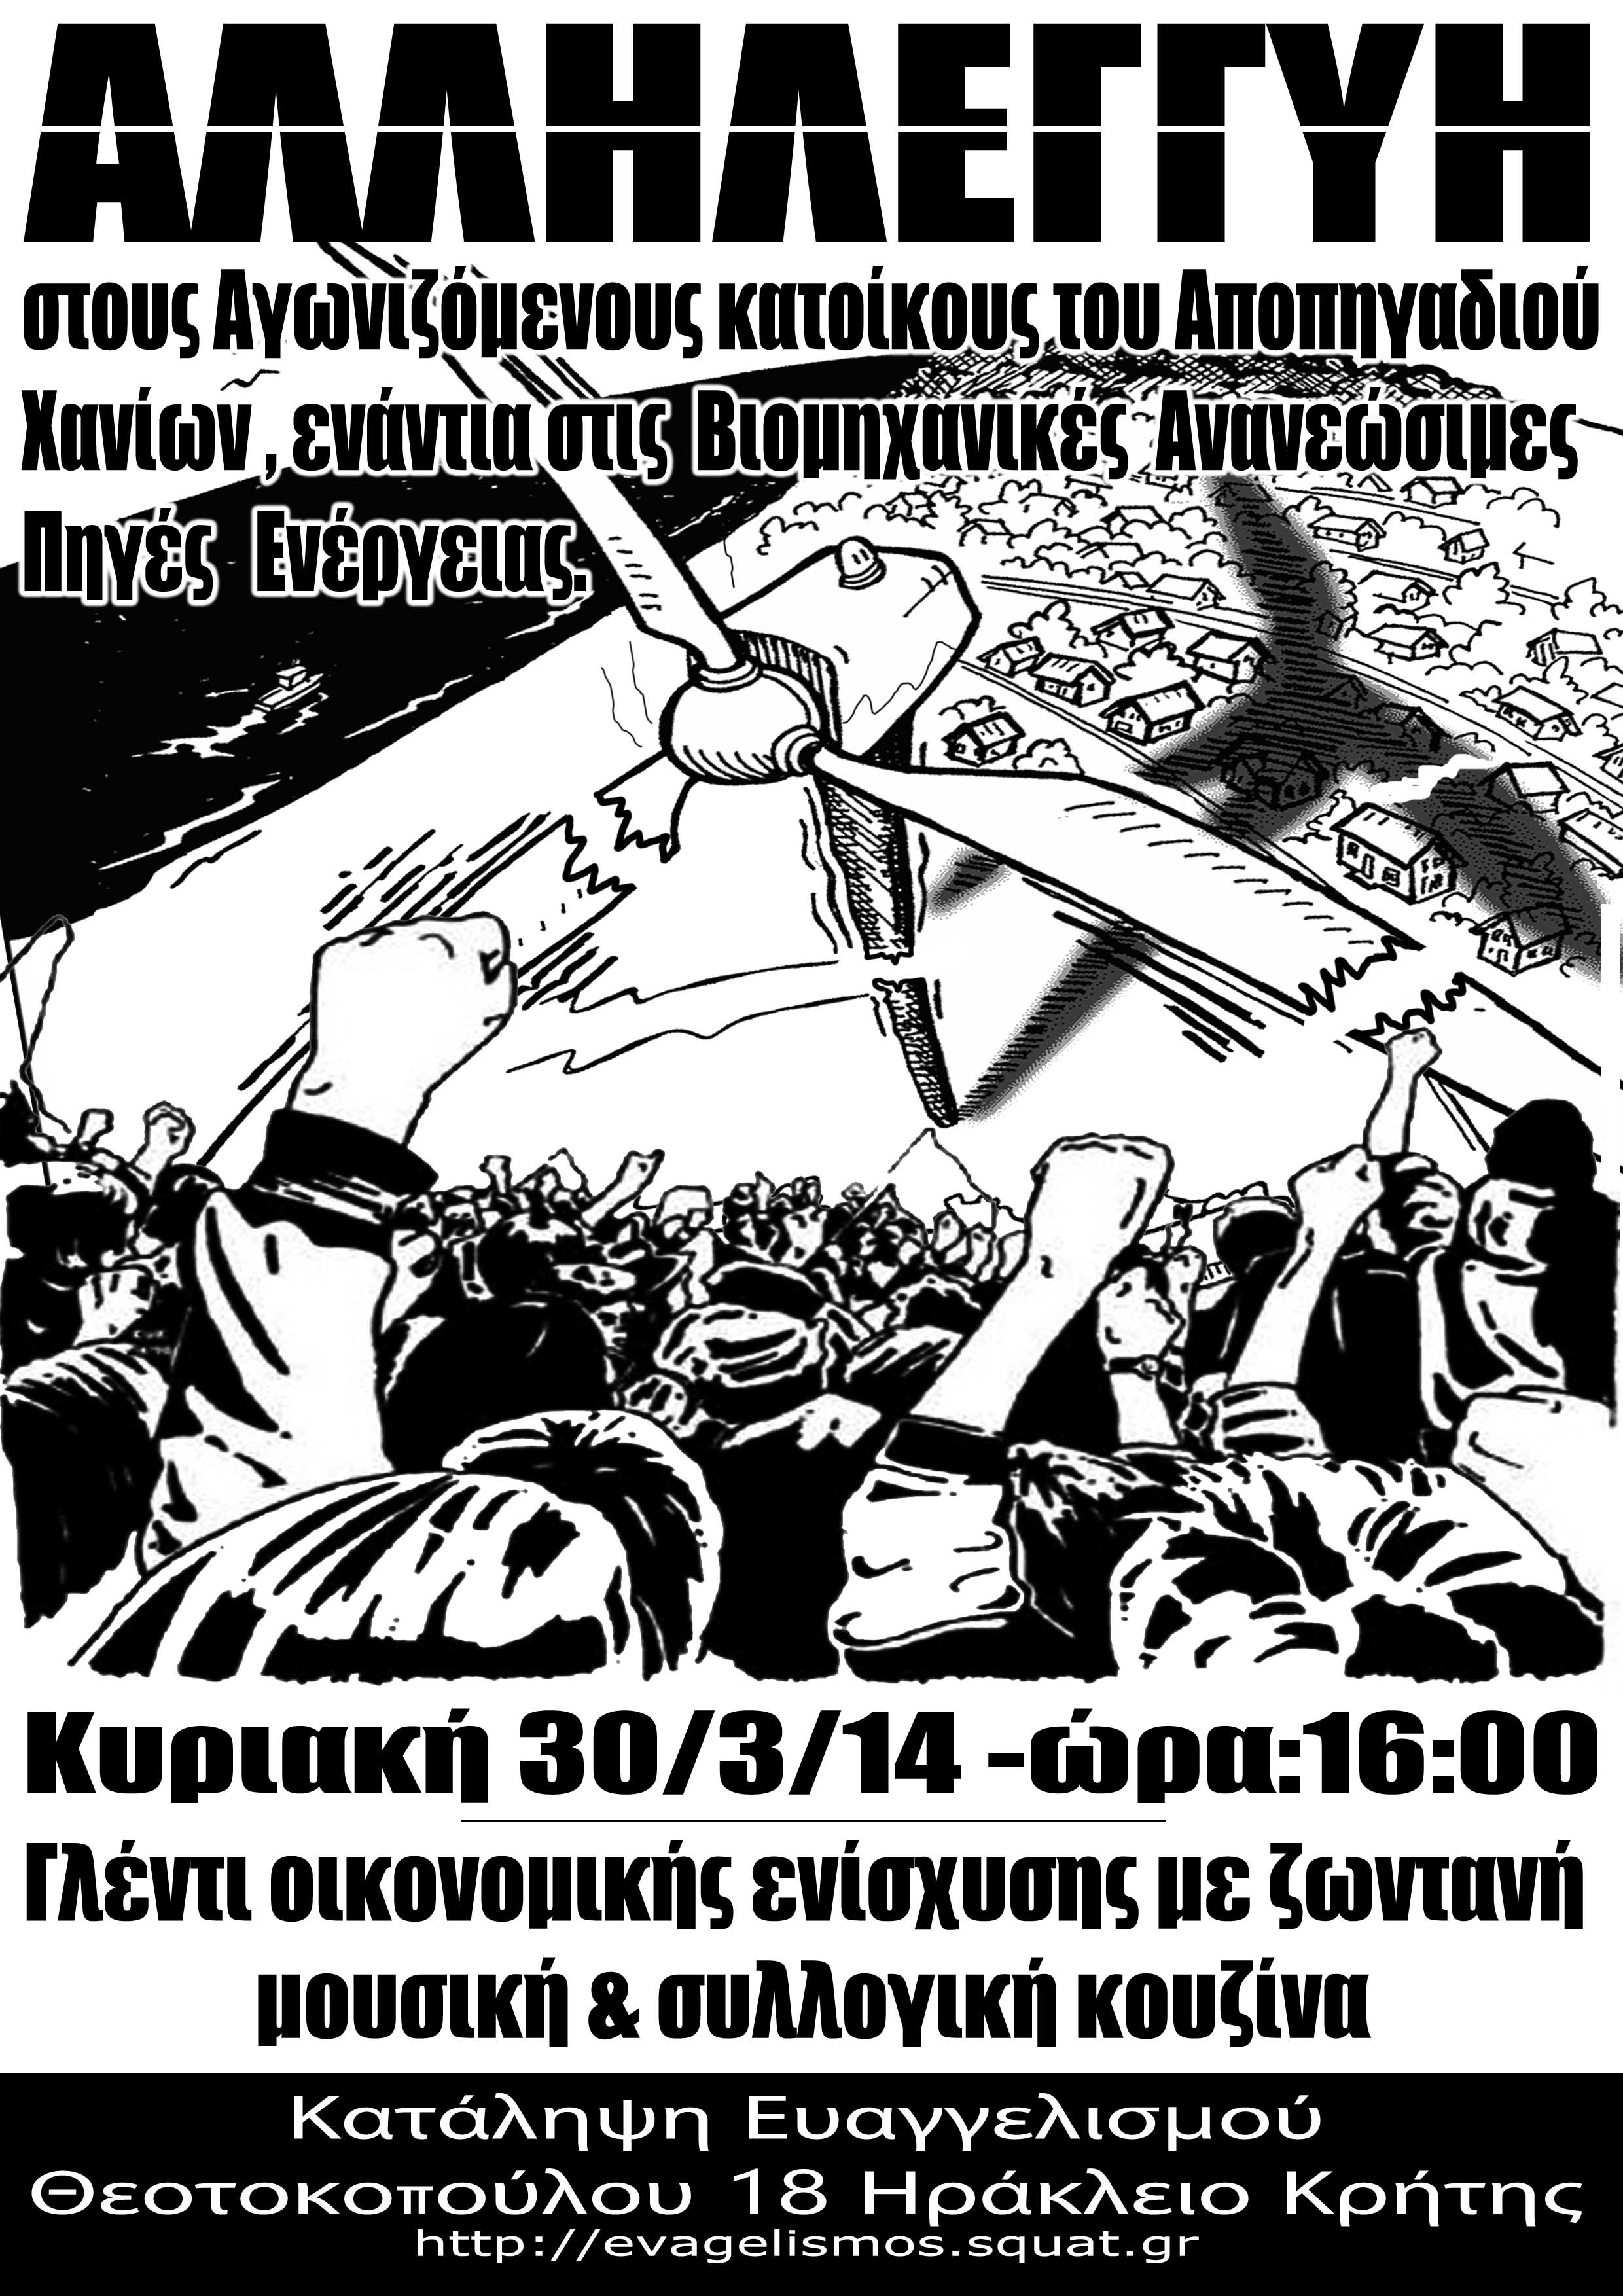 solidarity-apophgadi poster